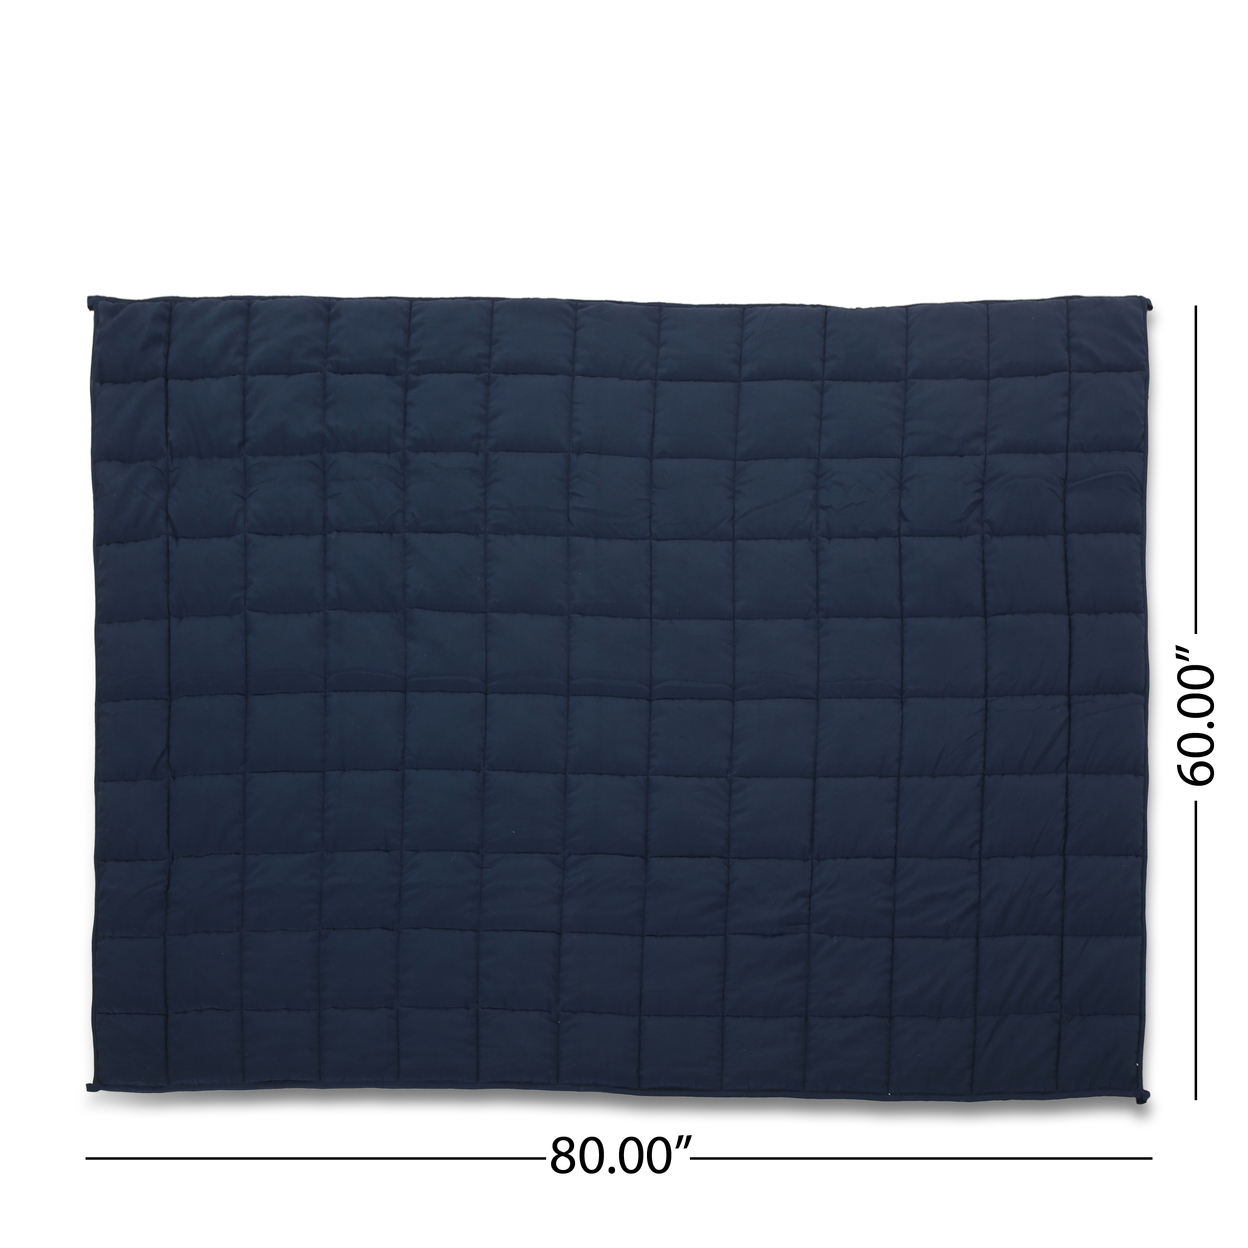 OkiOki Cotton Weighted Blanket - Navy Blue(20 Lbs)